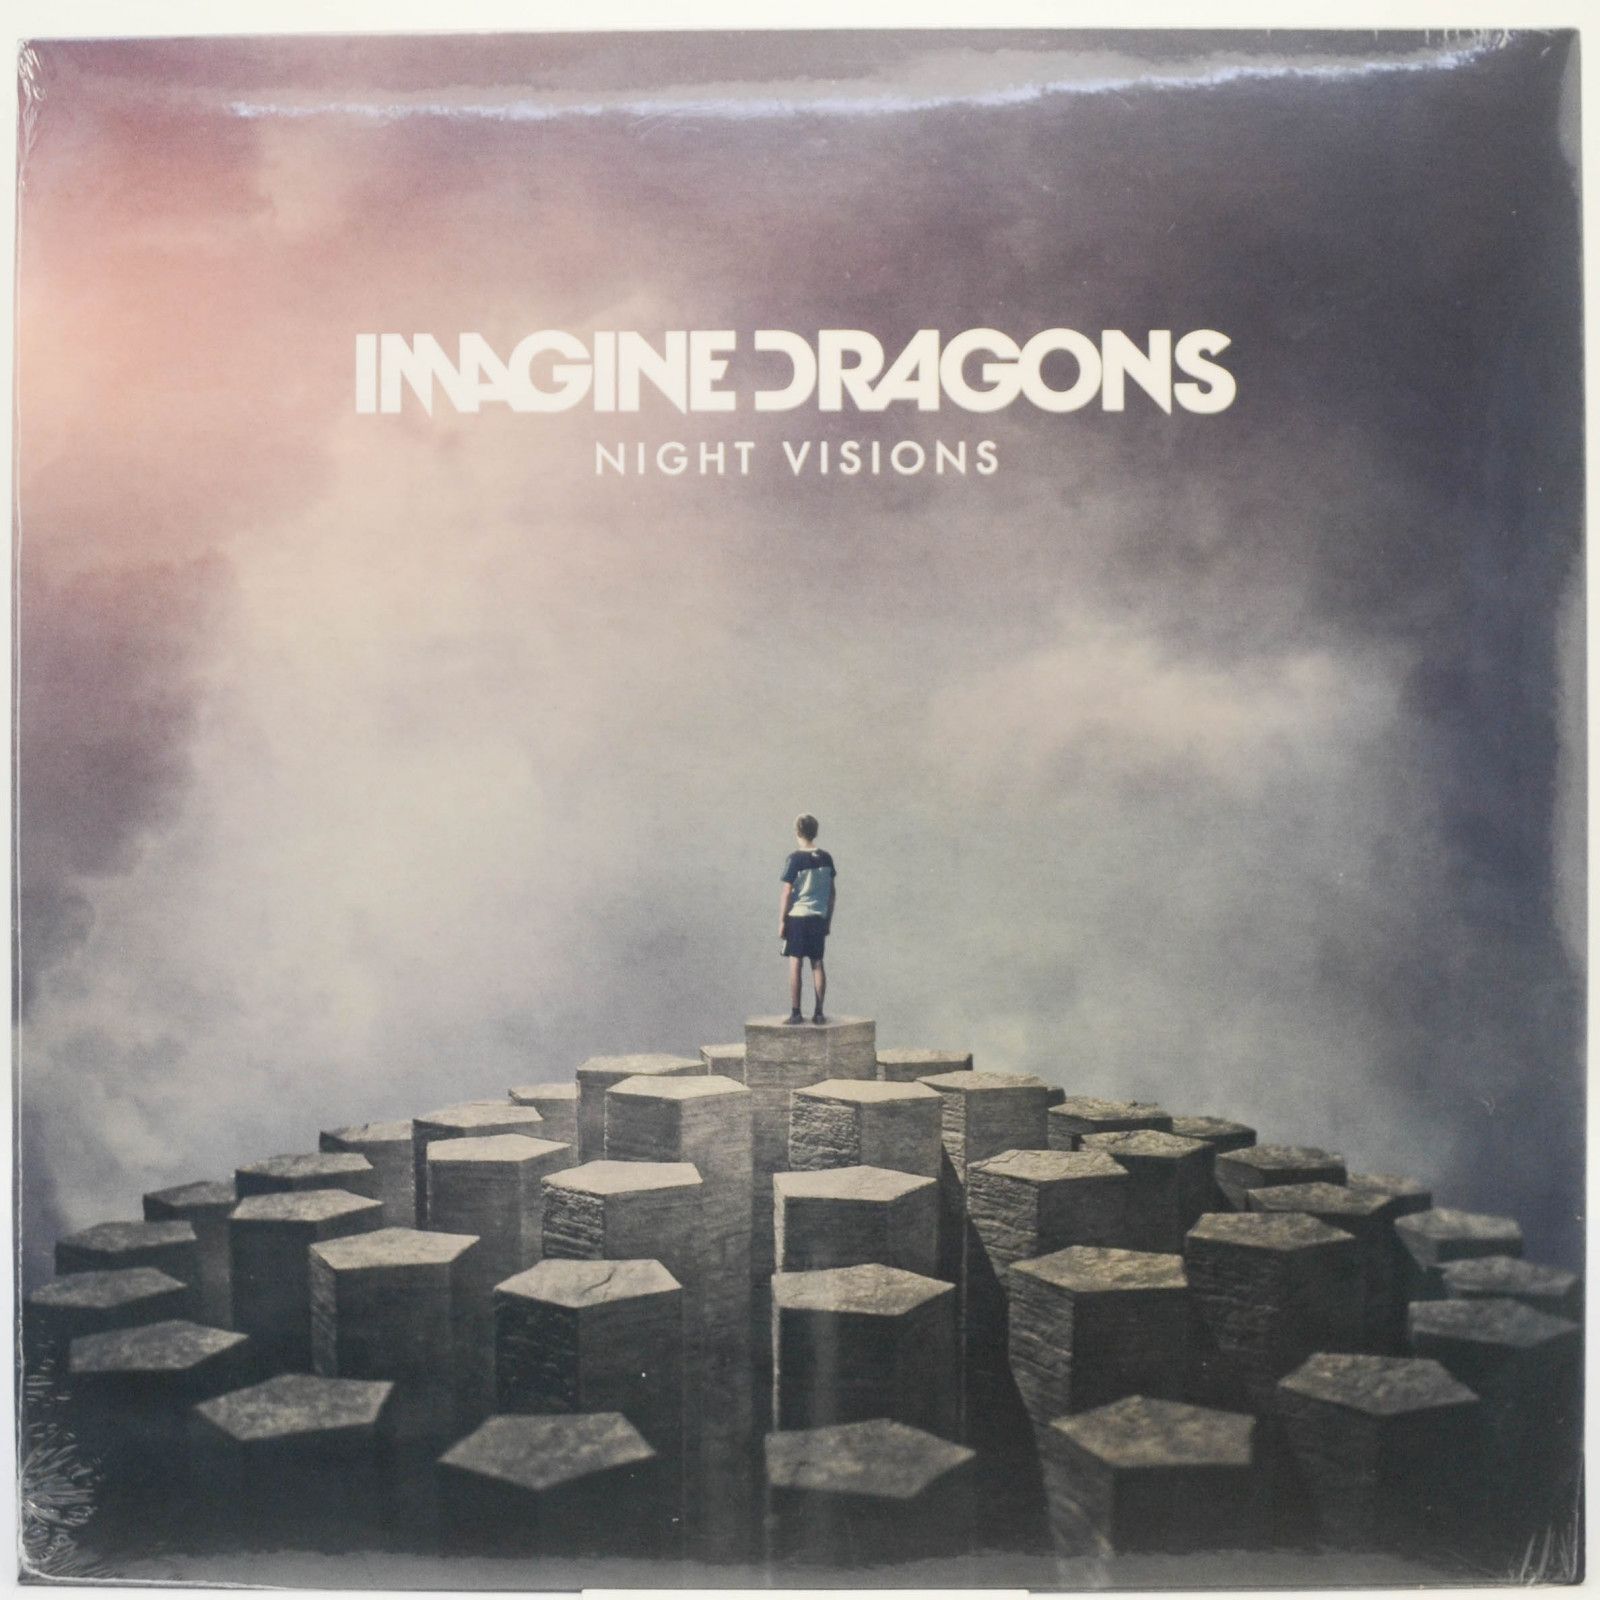 Imagine Dragons — Night Visions, 2012